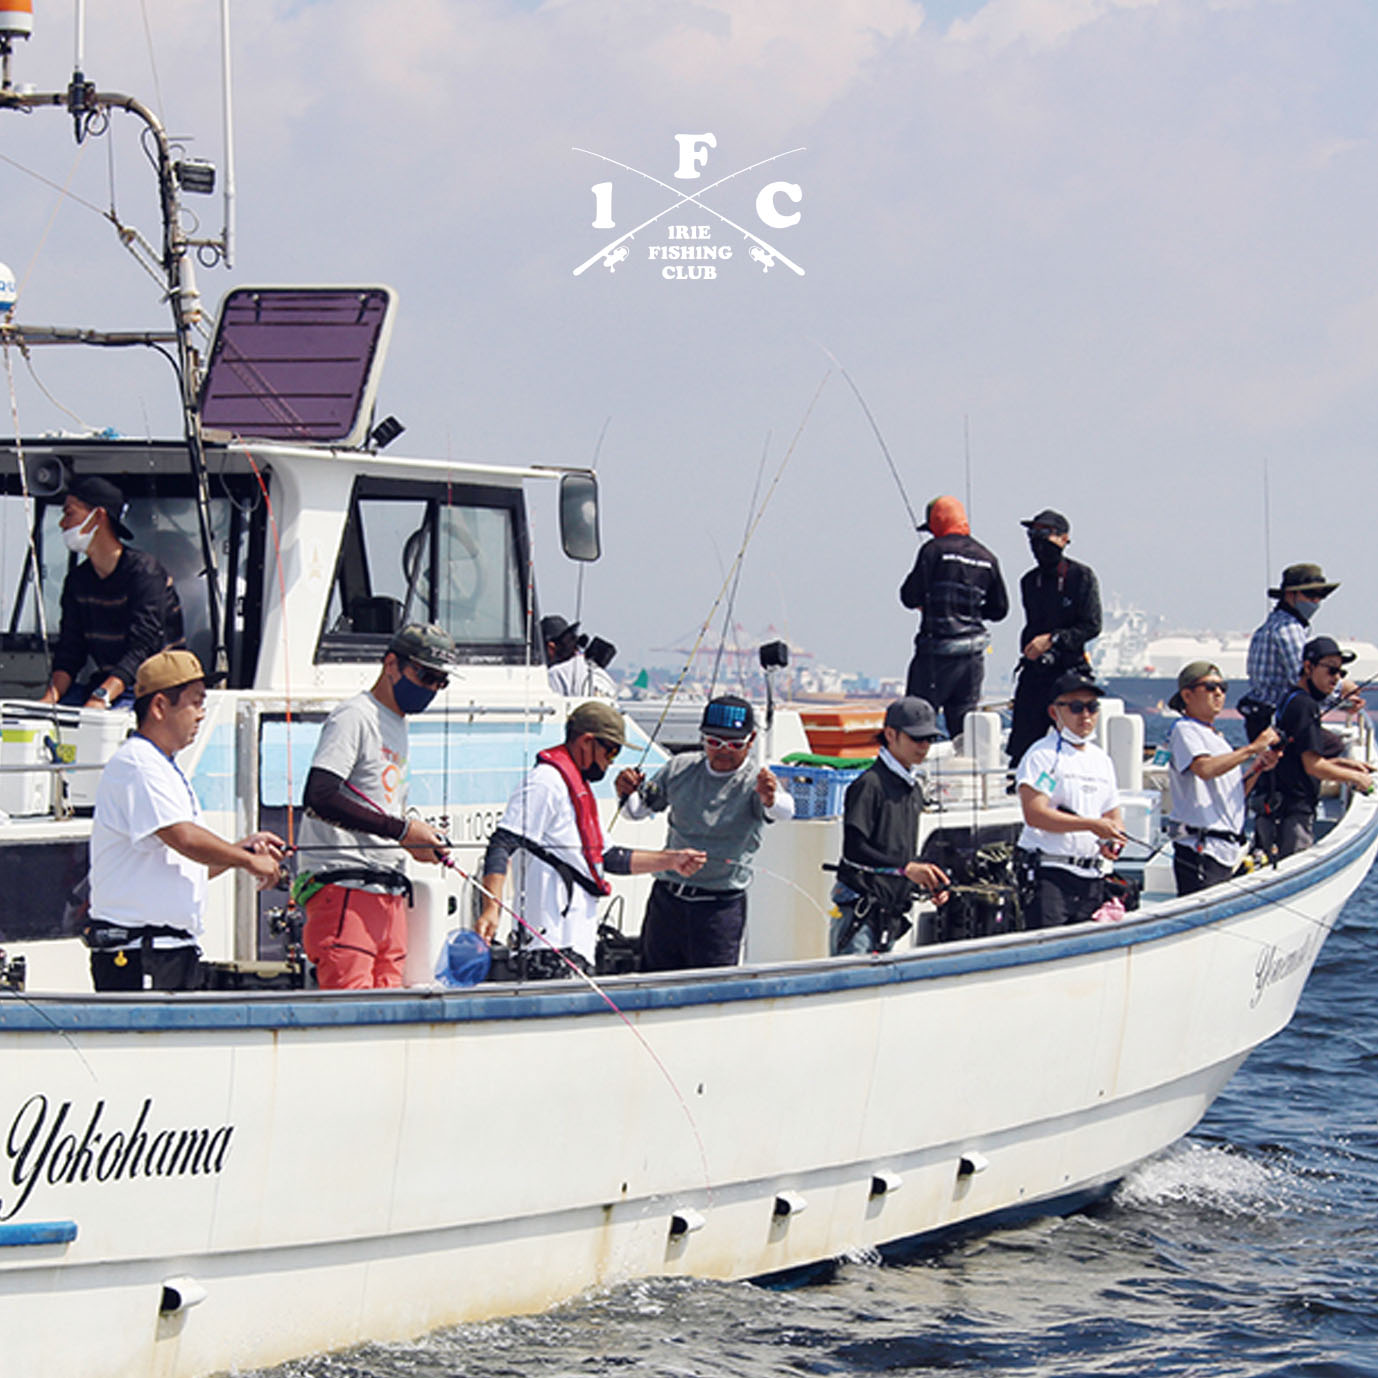 IRIE FISHING CLUB MEMBERS 2023 入会募集のお知らせ | IRIE FISHING CLUB